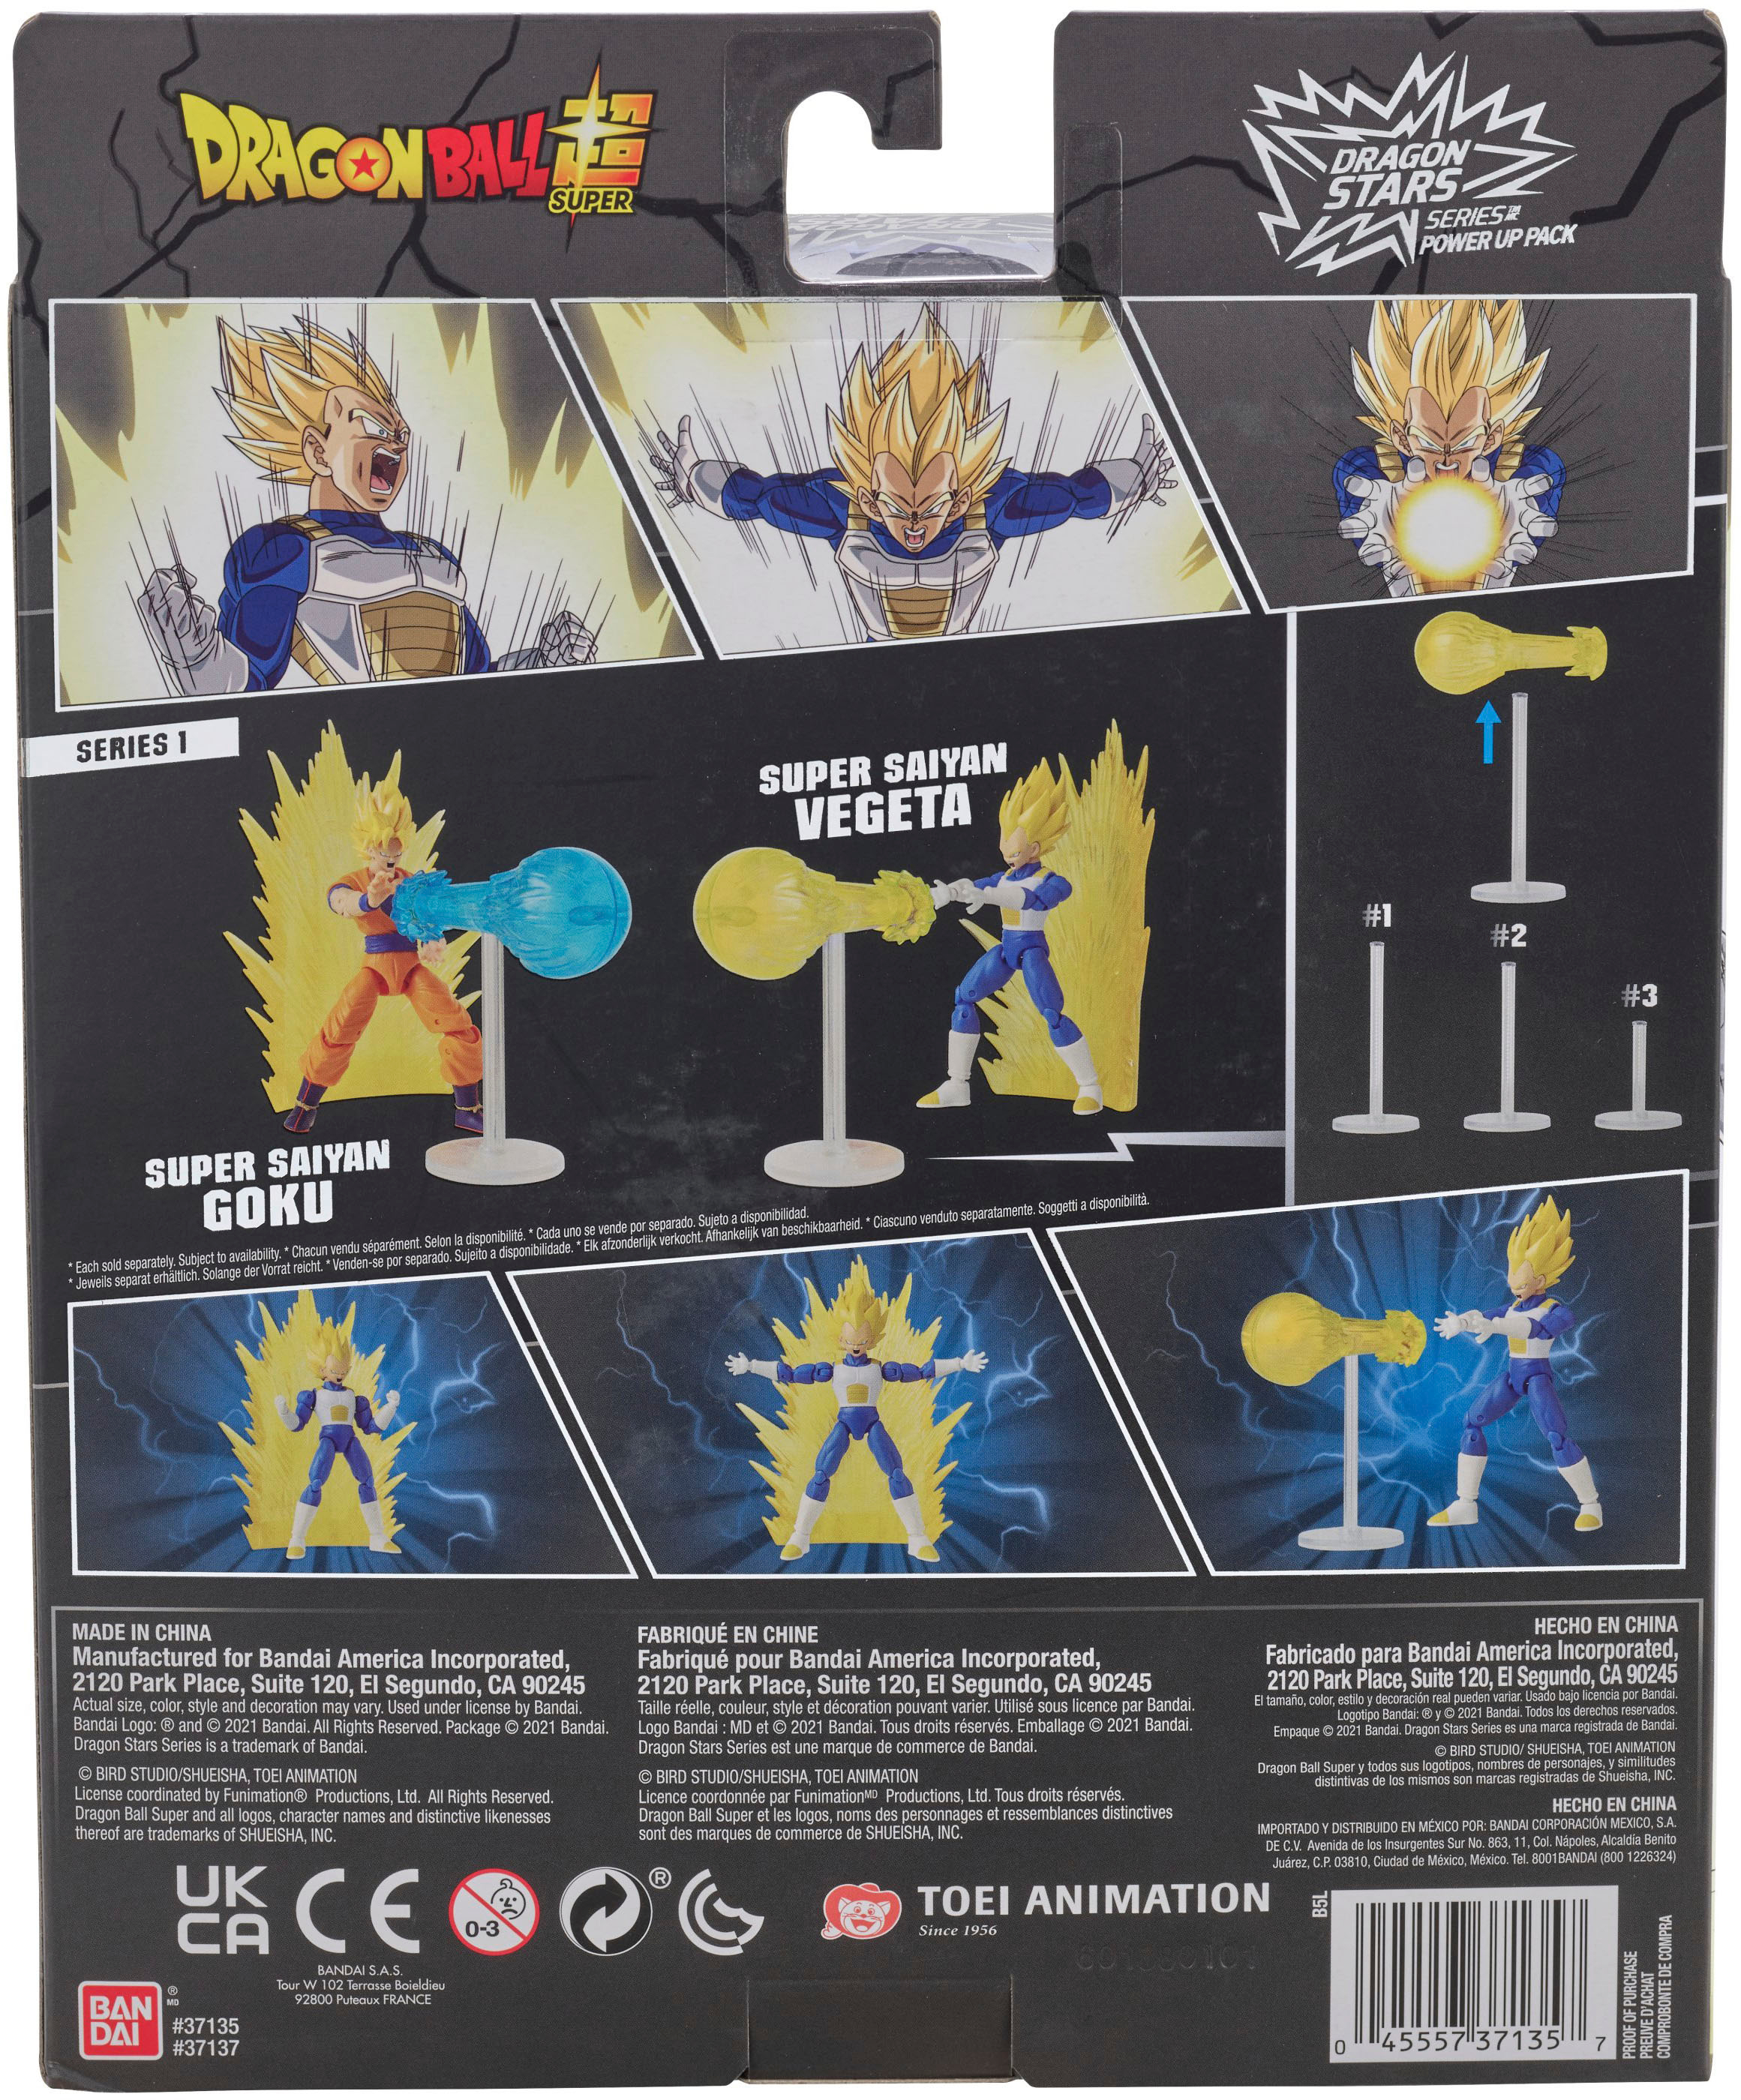 Best Buy: Bandai Dragon Ball Super Dragon Stars Power Up Pack Super Saiyan  Vegeta Action Figure 37137